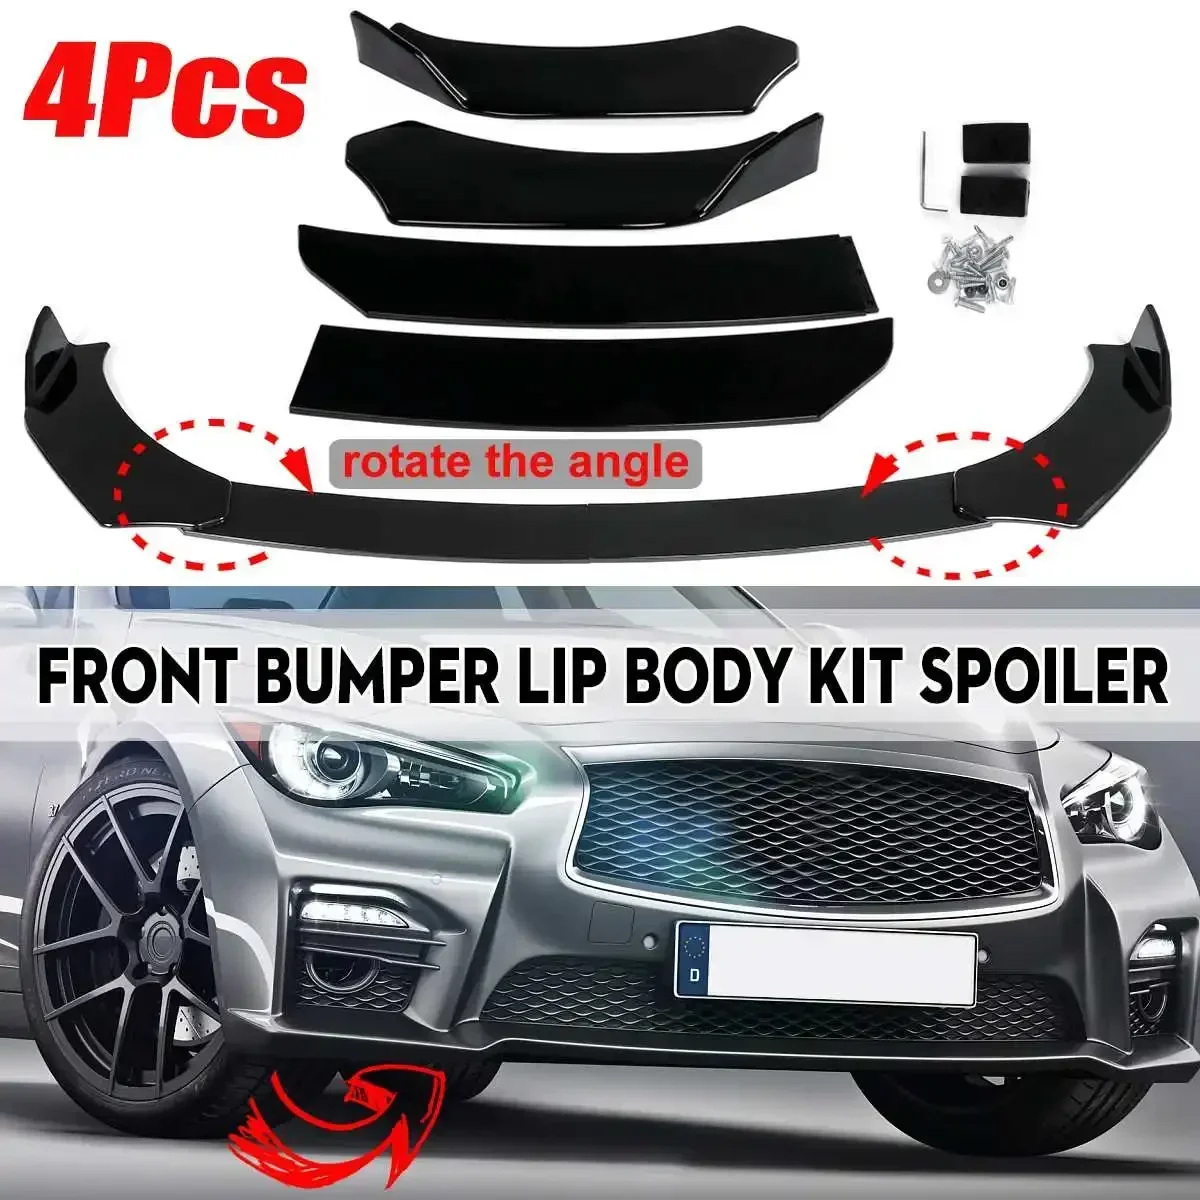 

Universal 4PC Car Front Bumper Lip Spoiler Guard Diffuser For Infiniti Q50 Q60 Q70 G25 G37 For Benz W205 W204 W203 W211 Body Kit